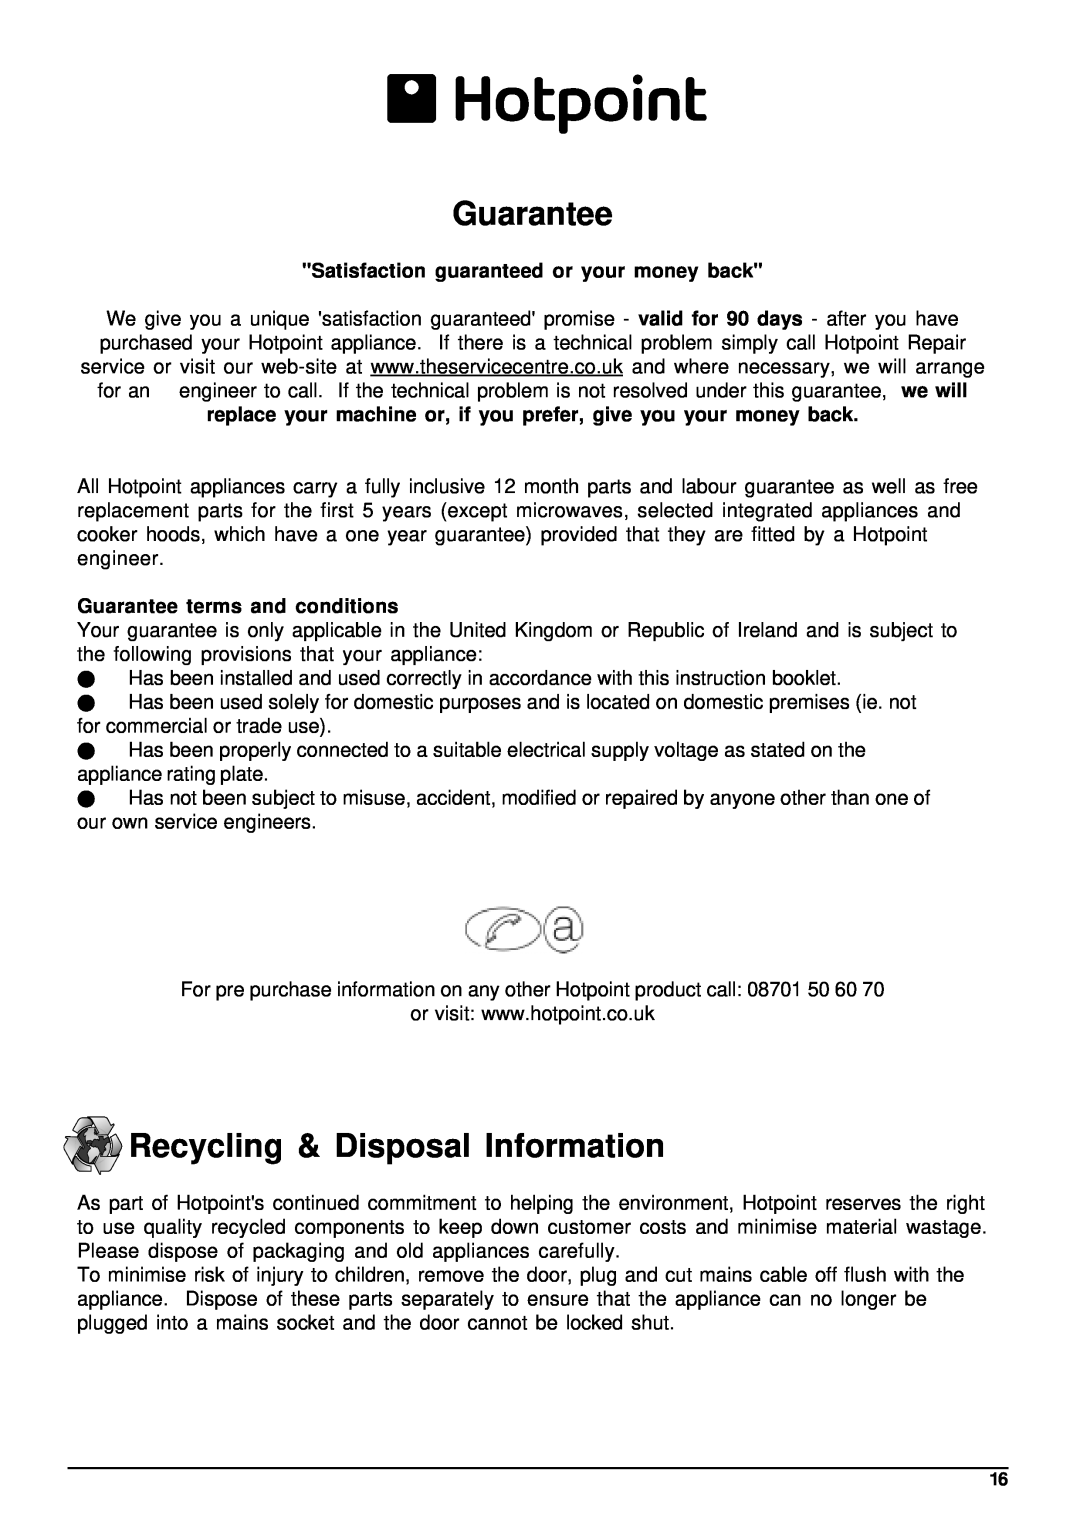 Hotpoint BCI450 manual Guarantee, Recycling & Disposal Information, Satisfaction guaranteed or your money back 